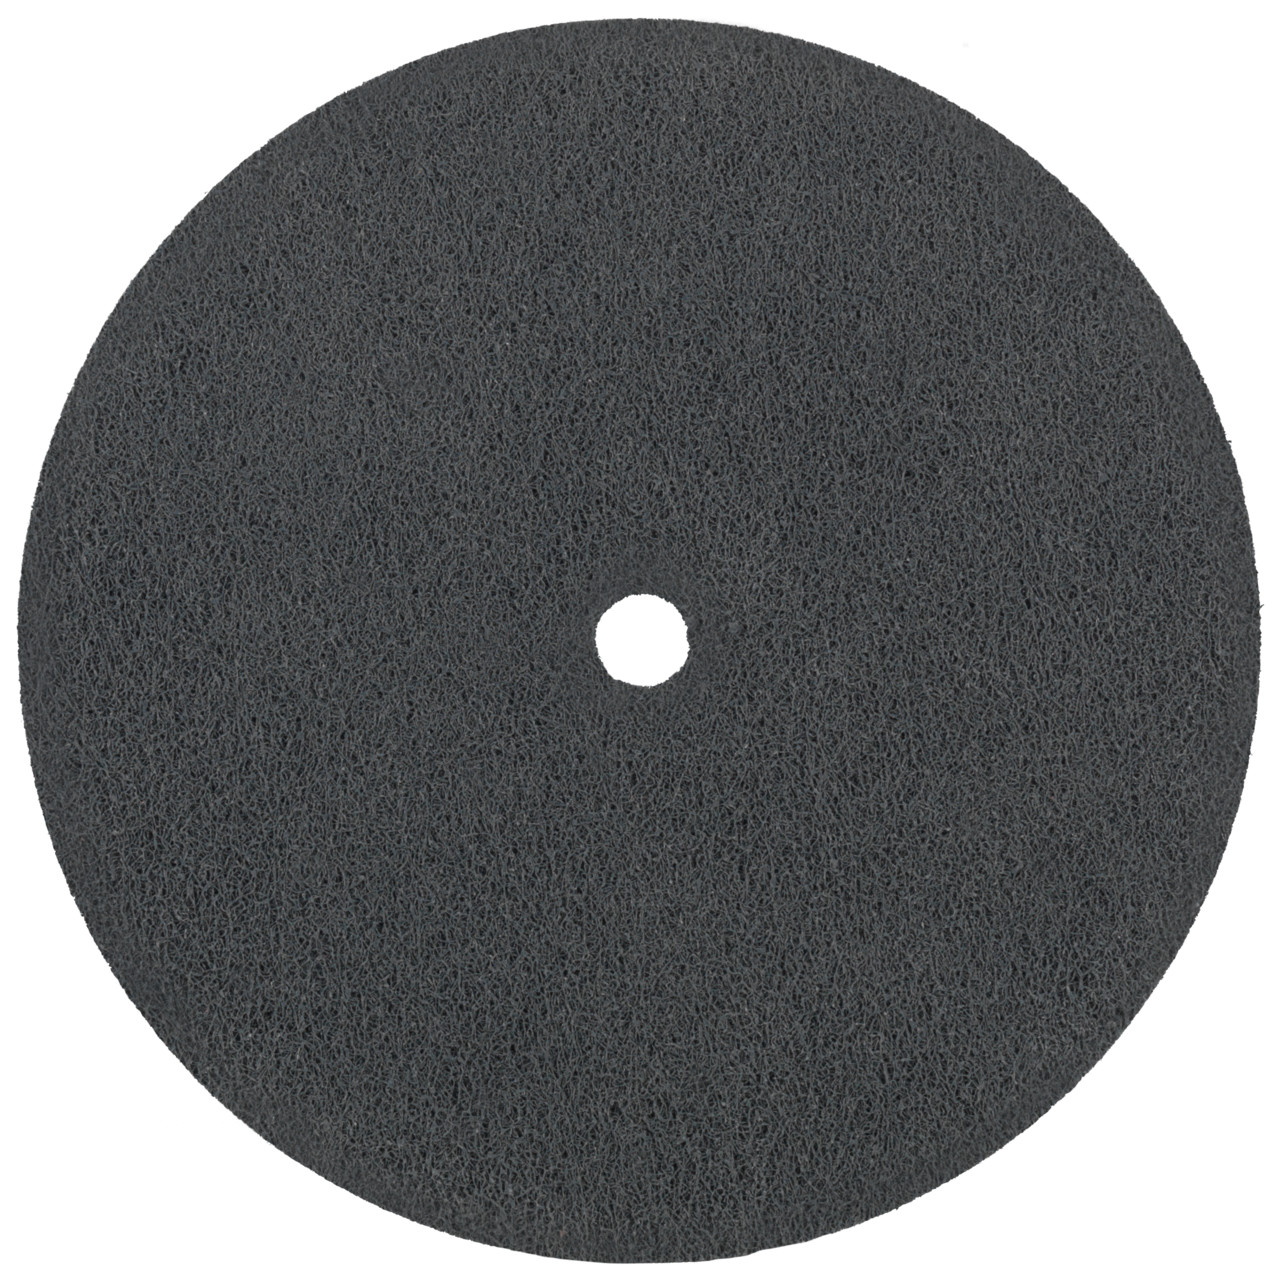 Tyrolit Discos compactos prensados DxDxH 152x25x12,7 Inserto universal, 3 C FEIN, forma: 1, Art. 34190299